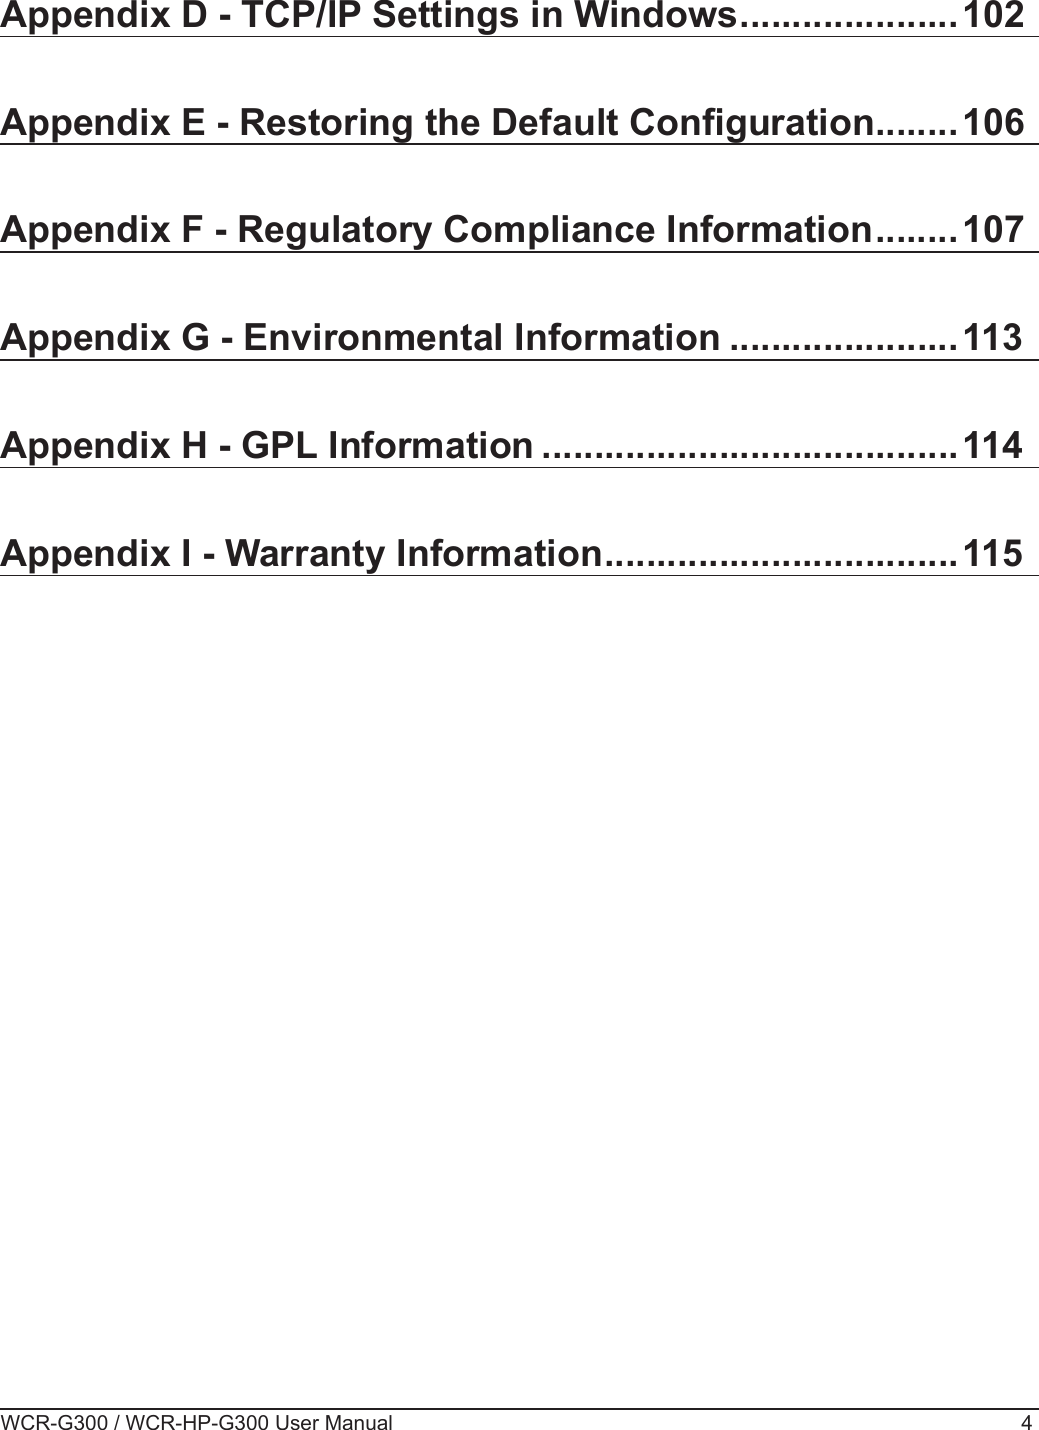 WCR-G300 / WCR-HP-G300 User Manual 4Appendix D - TCP/IP Settings in Windows .....................102Appendix E - Restoring the Default Conguration ........106Appendix F - Regulatory Compliance Information ........107Appendix G - Environmental Information ......................113Appendix H - GPL Information ........................................114Appendix I - Warranty Information ..................................115